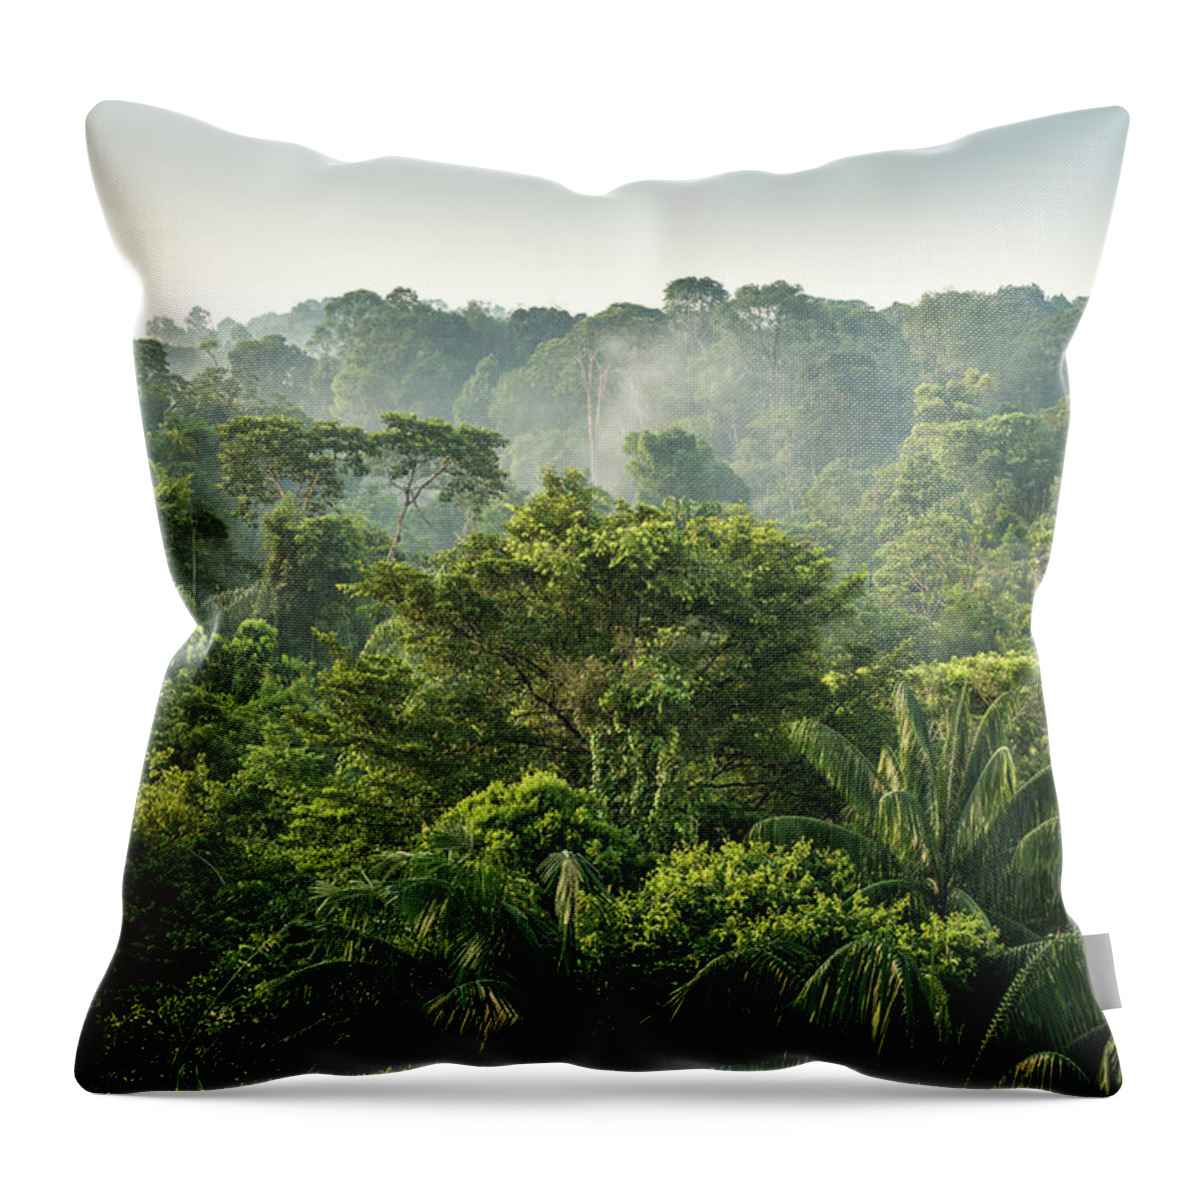 Scenics Throw Pillow featuring the photograph Tropical Rainforest by Chanachai Panichpattanakij